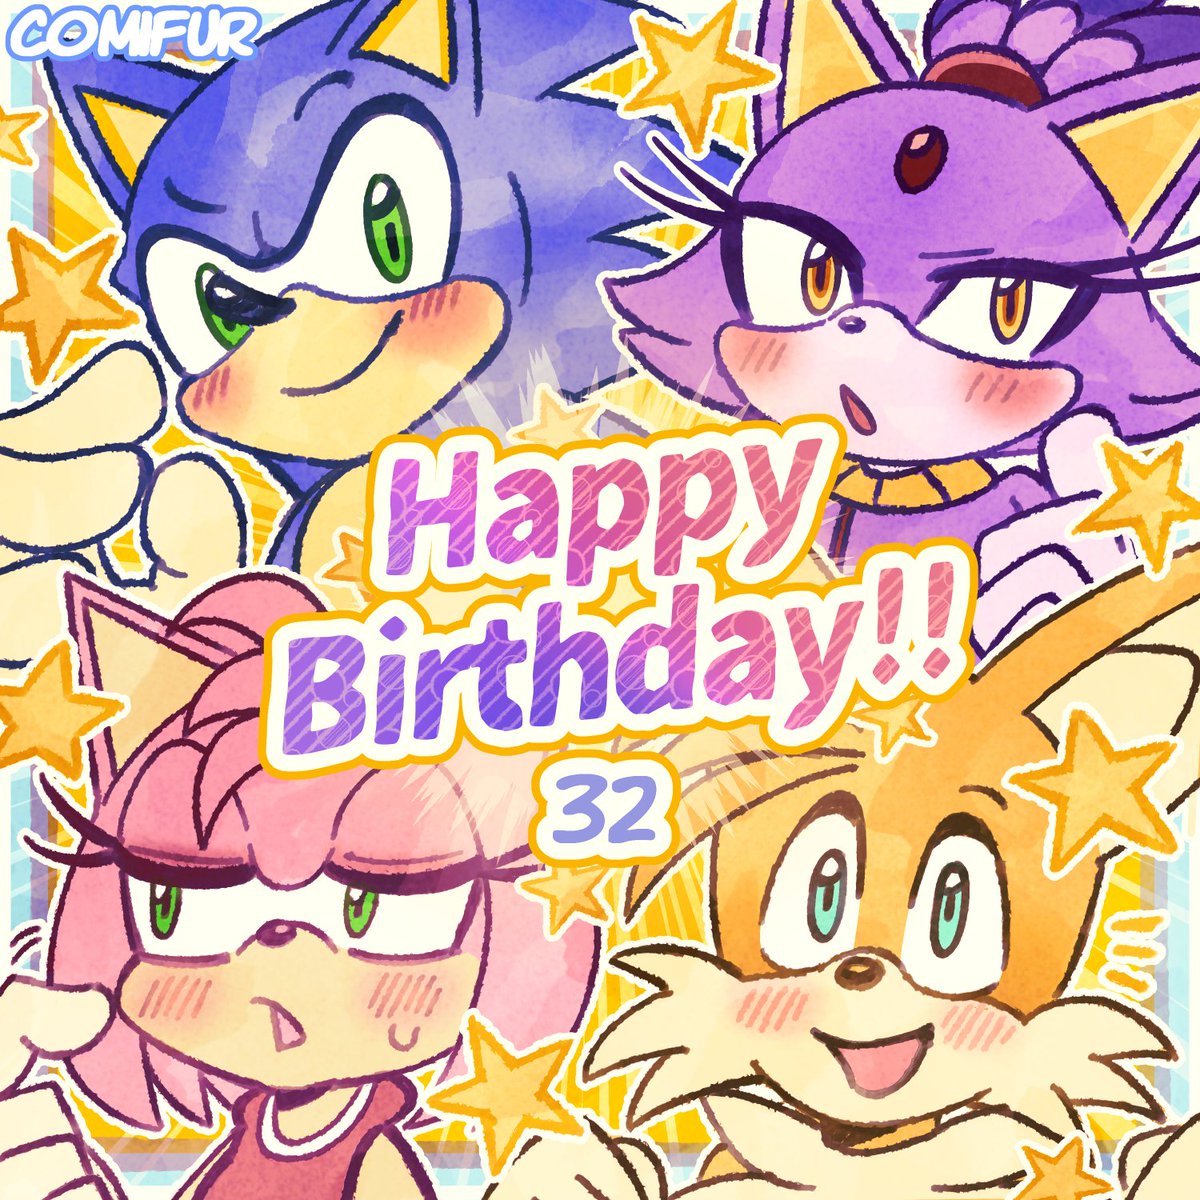 HAPPY BIRTHDAY SONIC!! ⭐
#SonicTheHedgehog #Sonic32nd